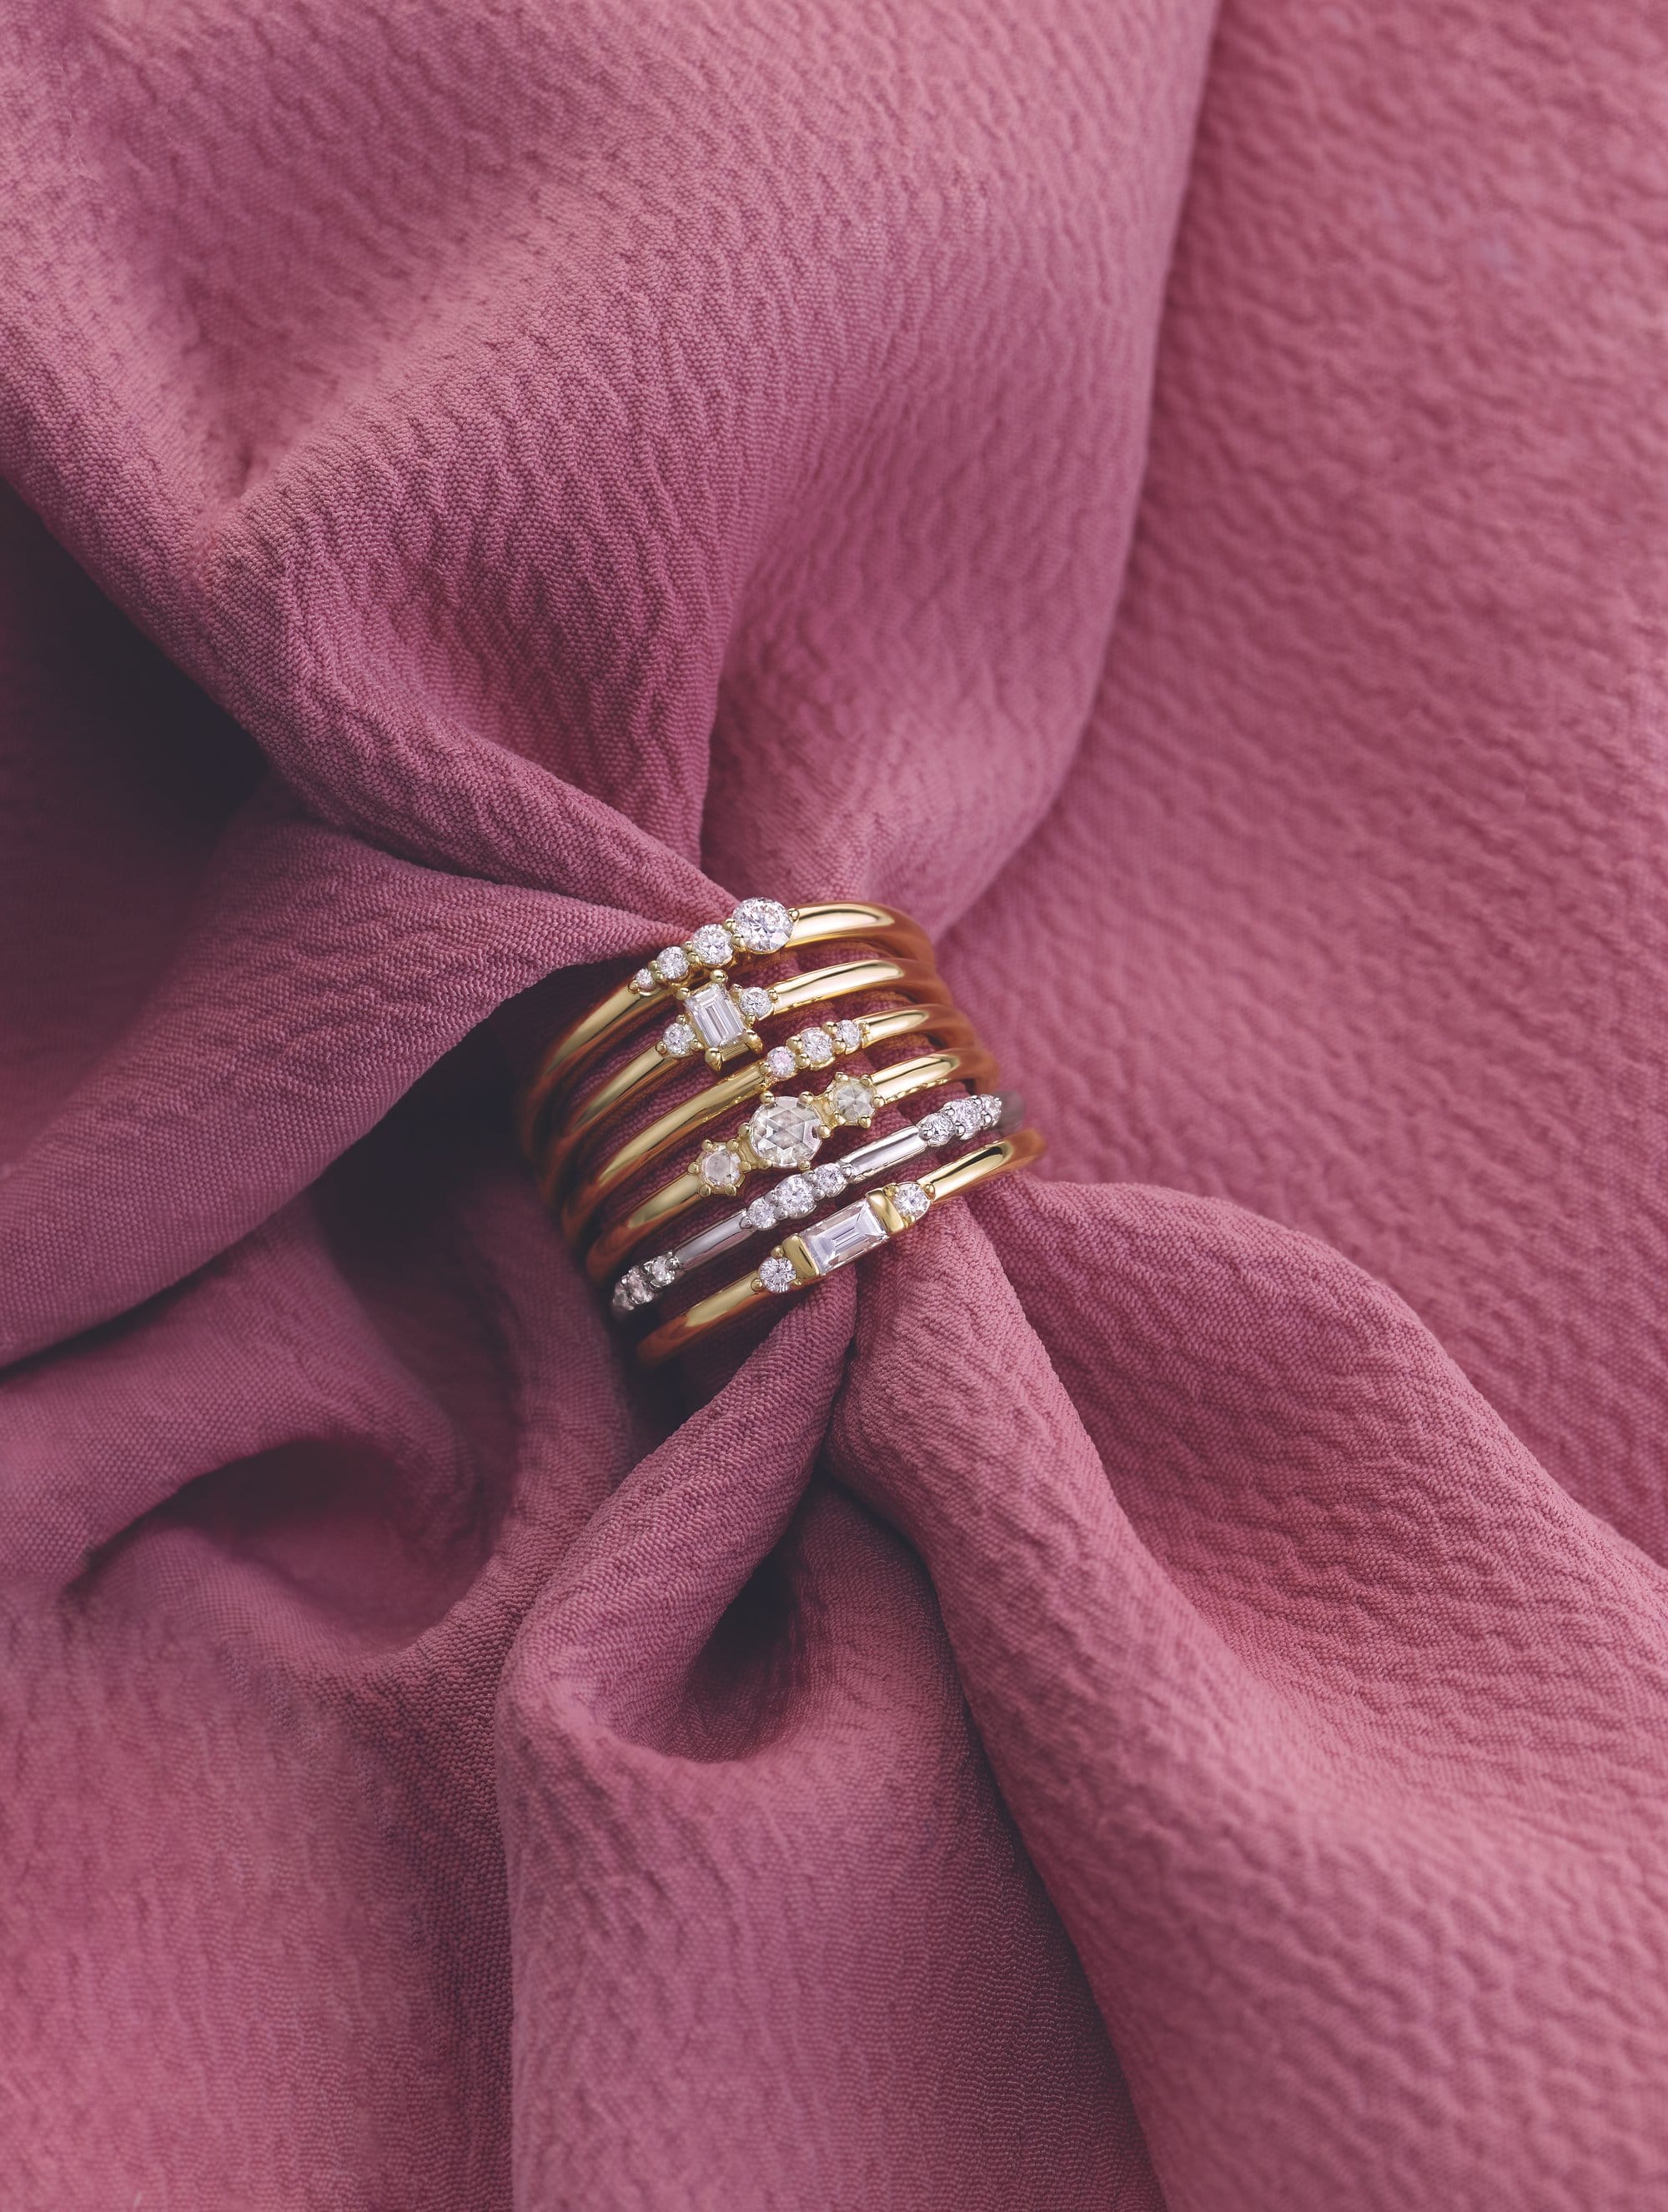 Tania Band -Graduated Diamond, Moissanite or Sapphire Stacking Wedding Ring